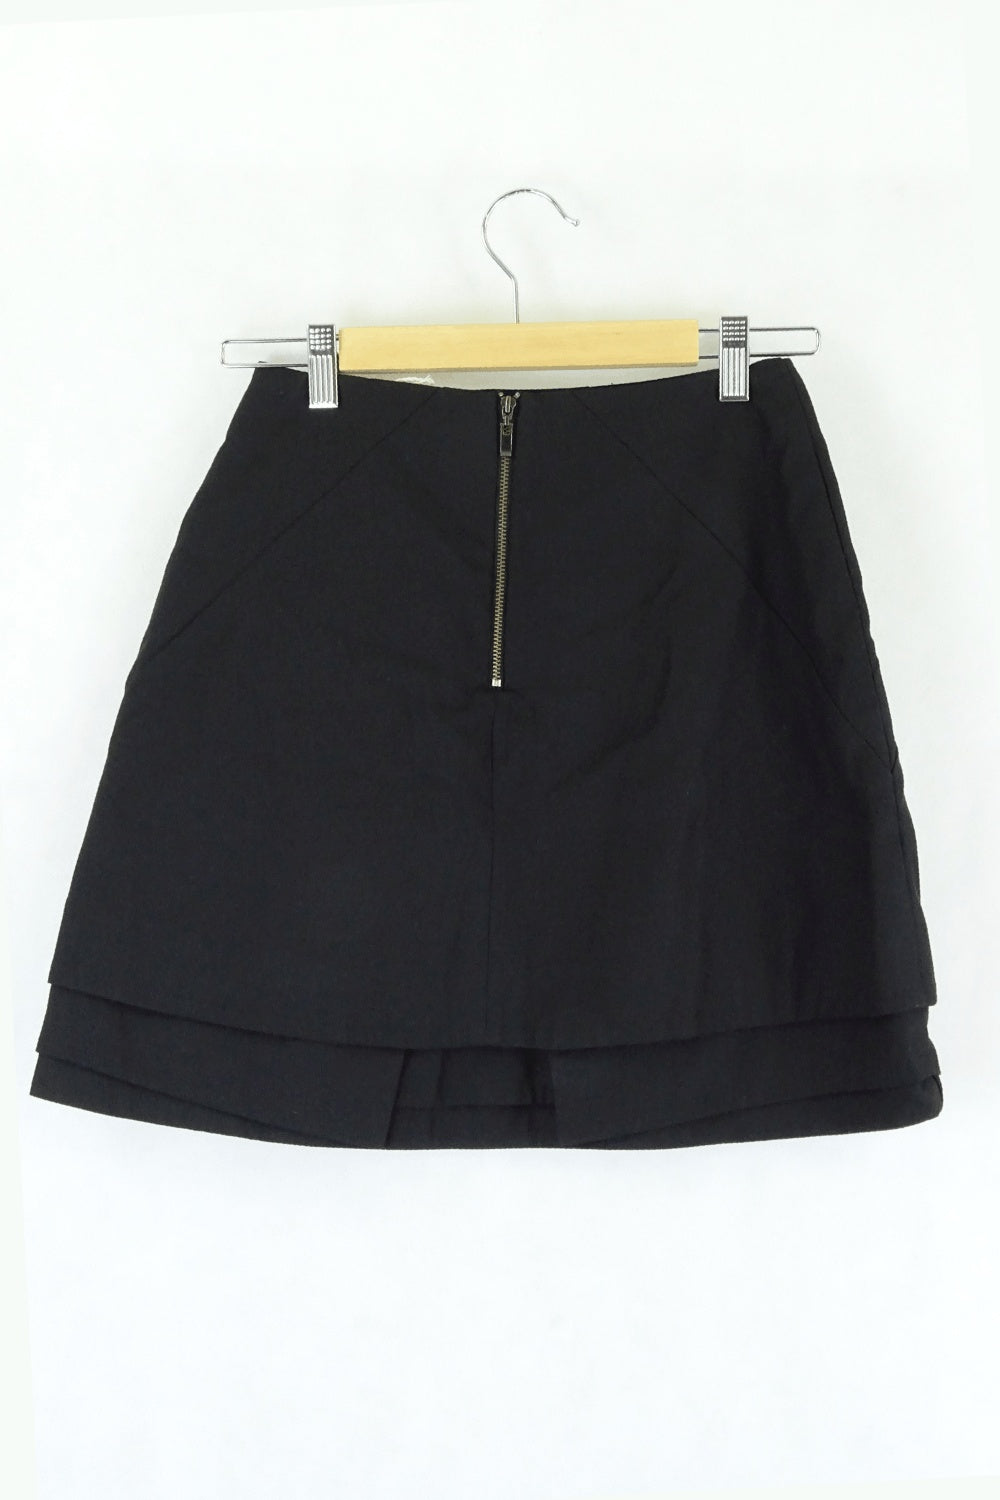 Cue black skirt 6